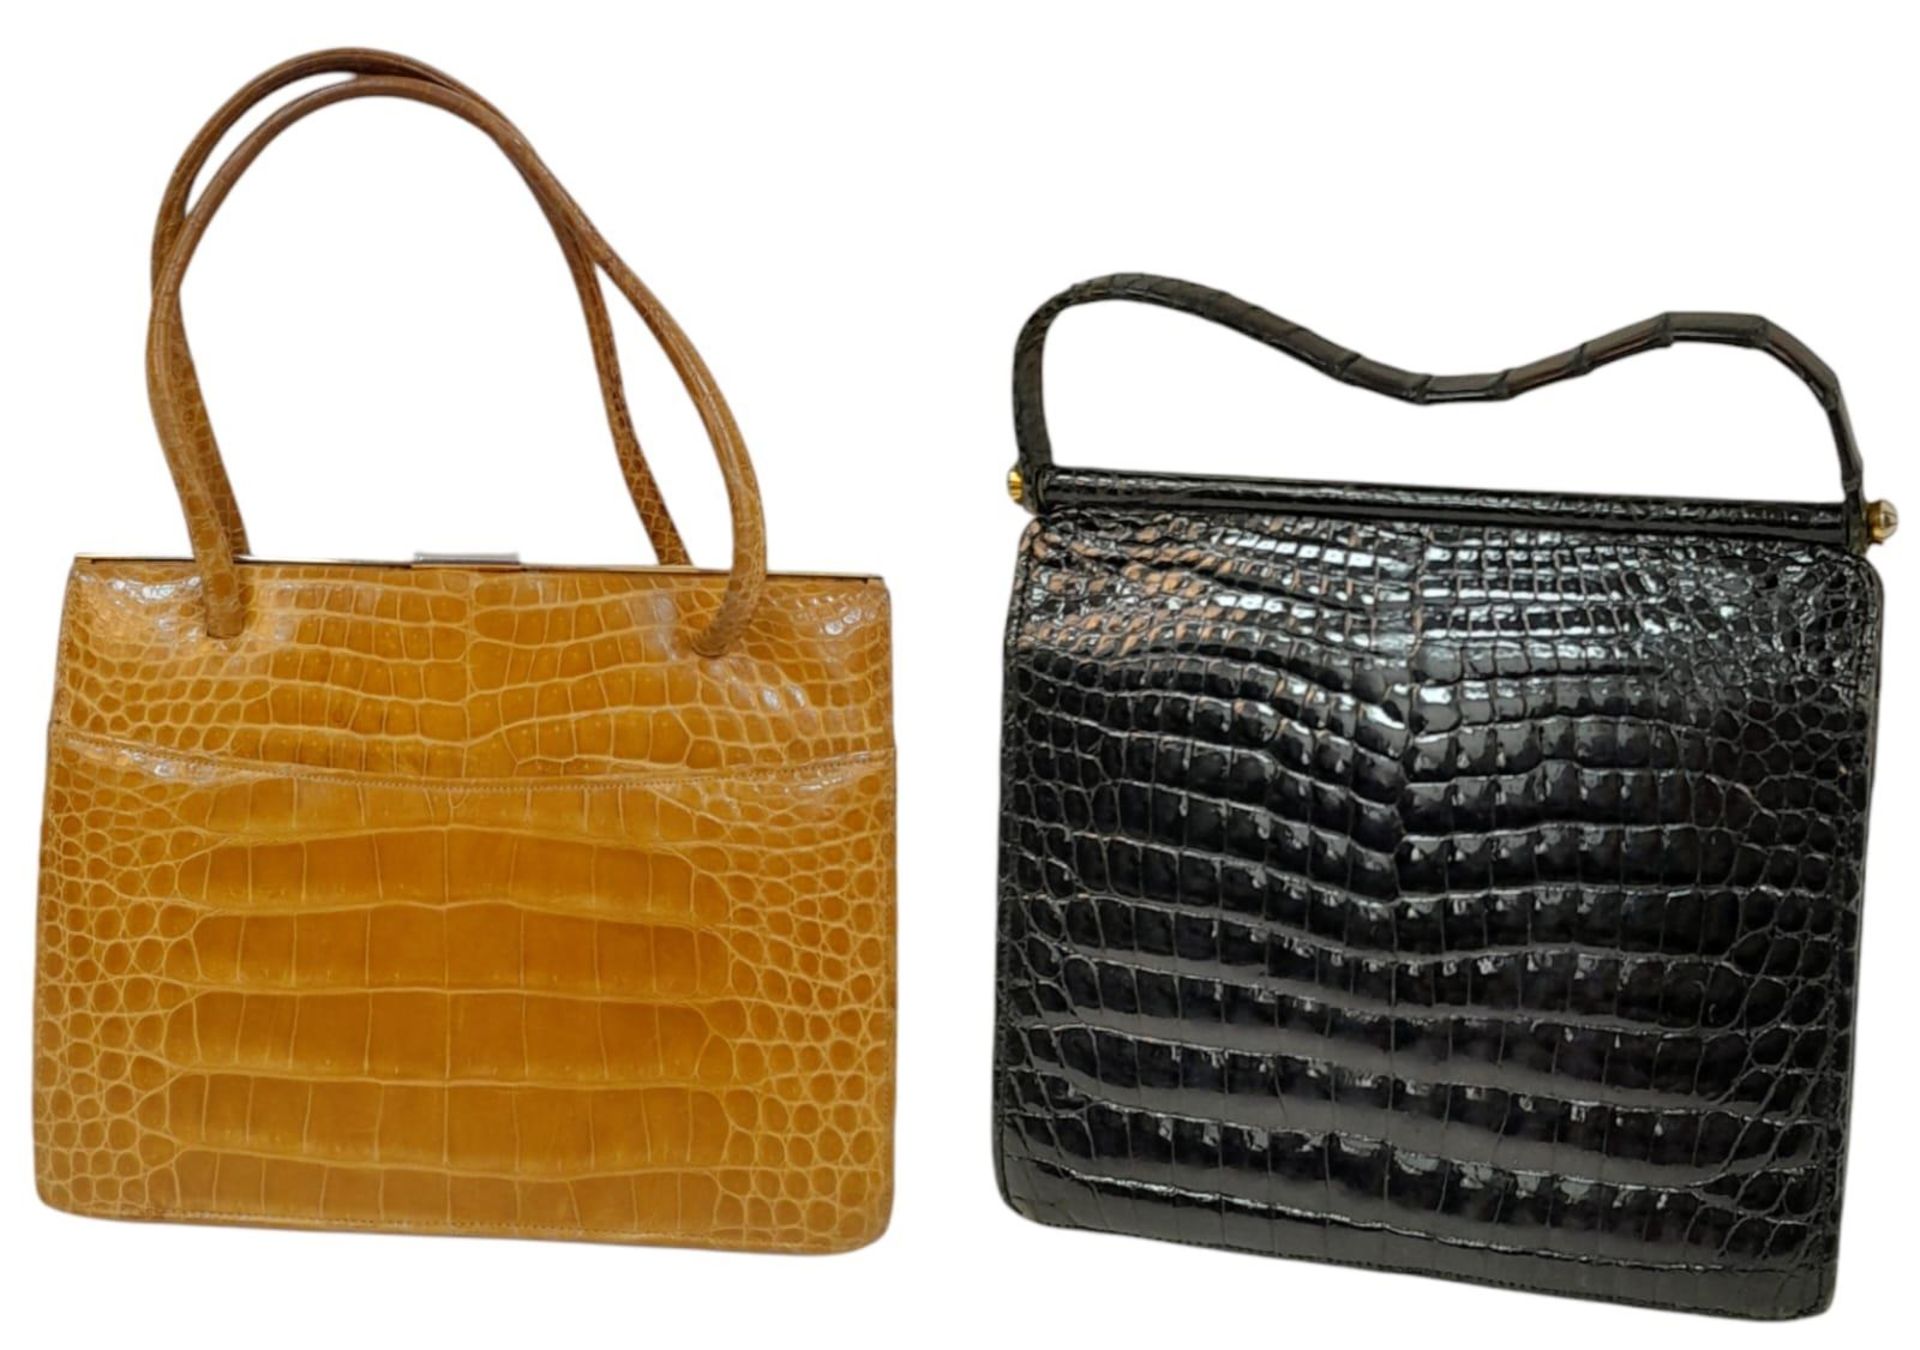 Two Crocodile Leather Hand Bags. Black crocodile bag has gold-toned hardware, a single strap and - Bild 2 aus 6